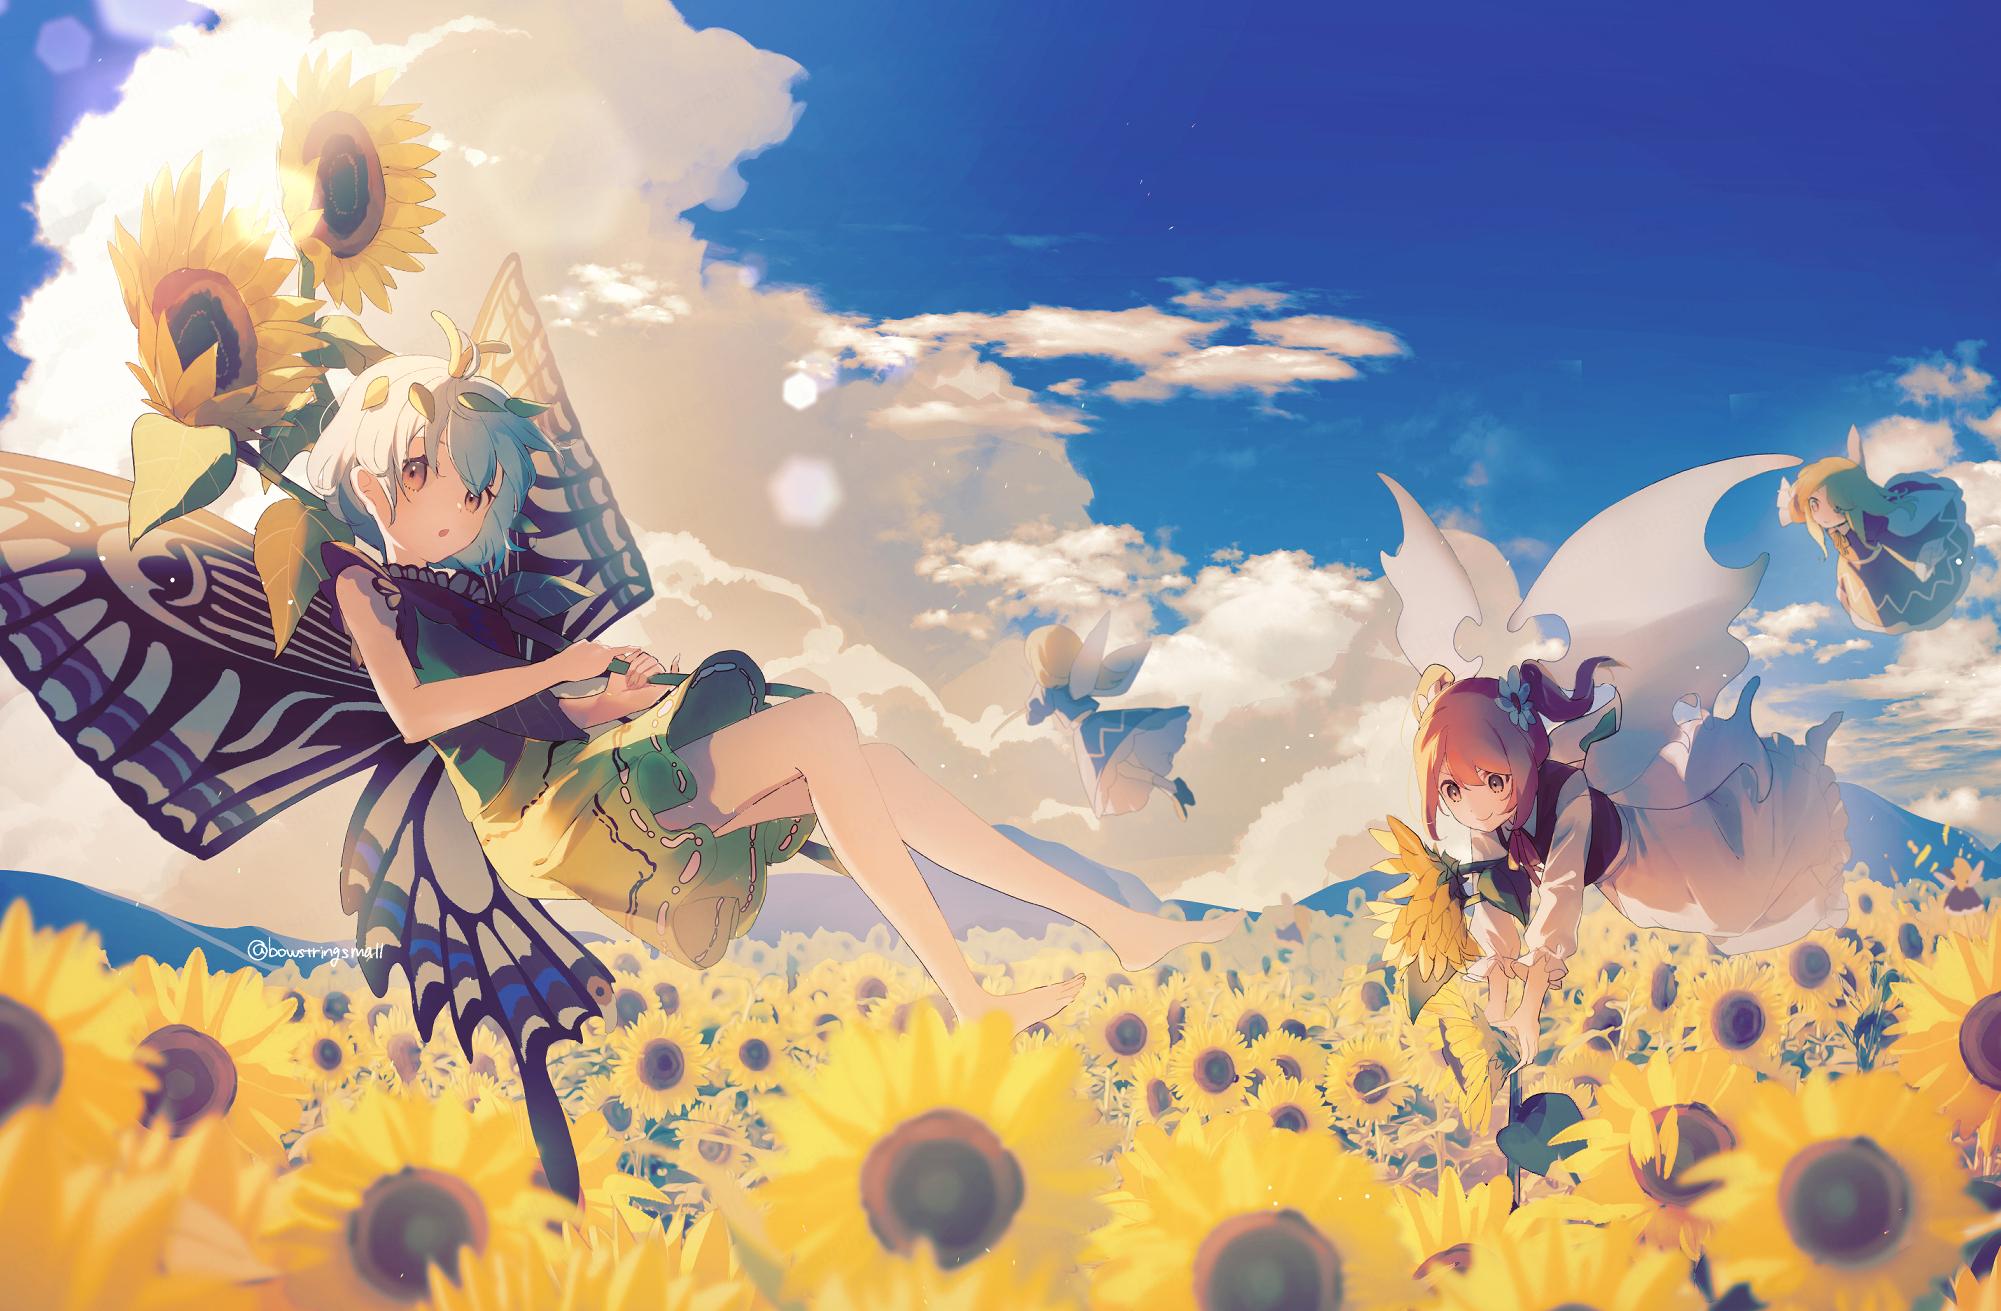 HD wallpaper, Flower In Hair, Wings, Eternity Larva, Clouds, Sunflowers, Anime, Flowers, Leaves, Looking At Viewer, Sky, Anime Girls, Touhou